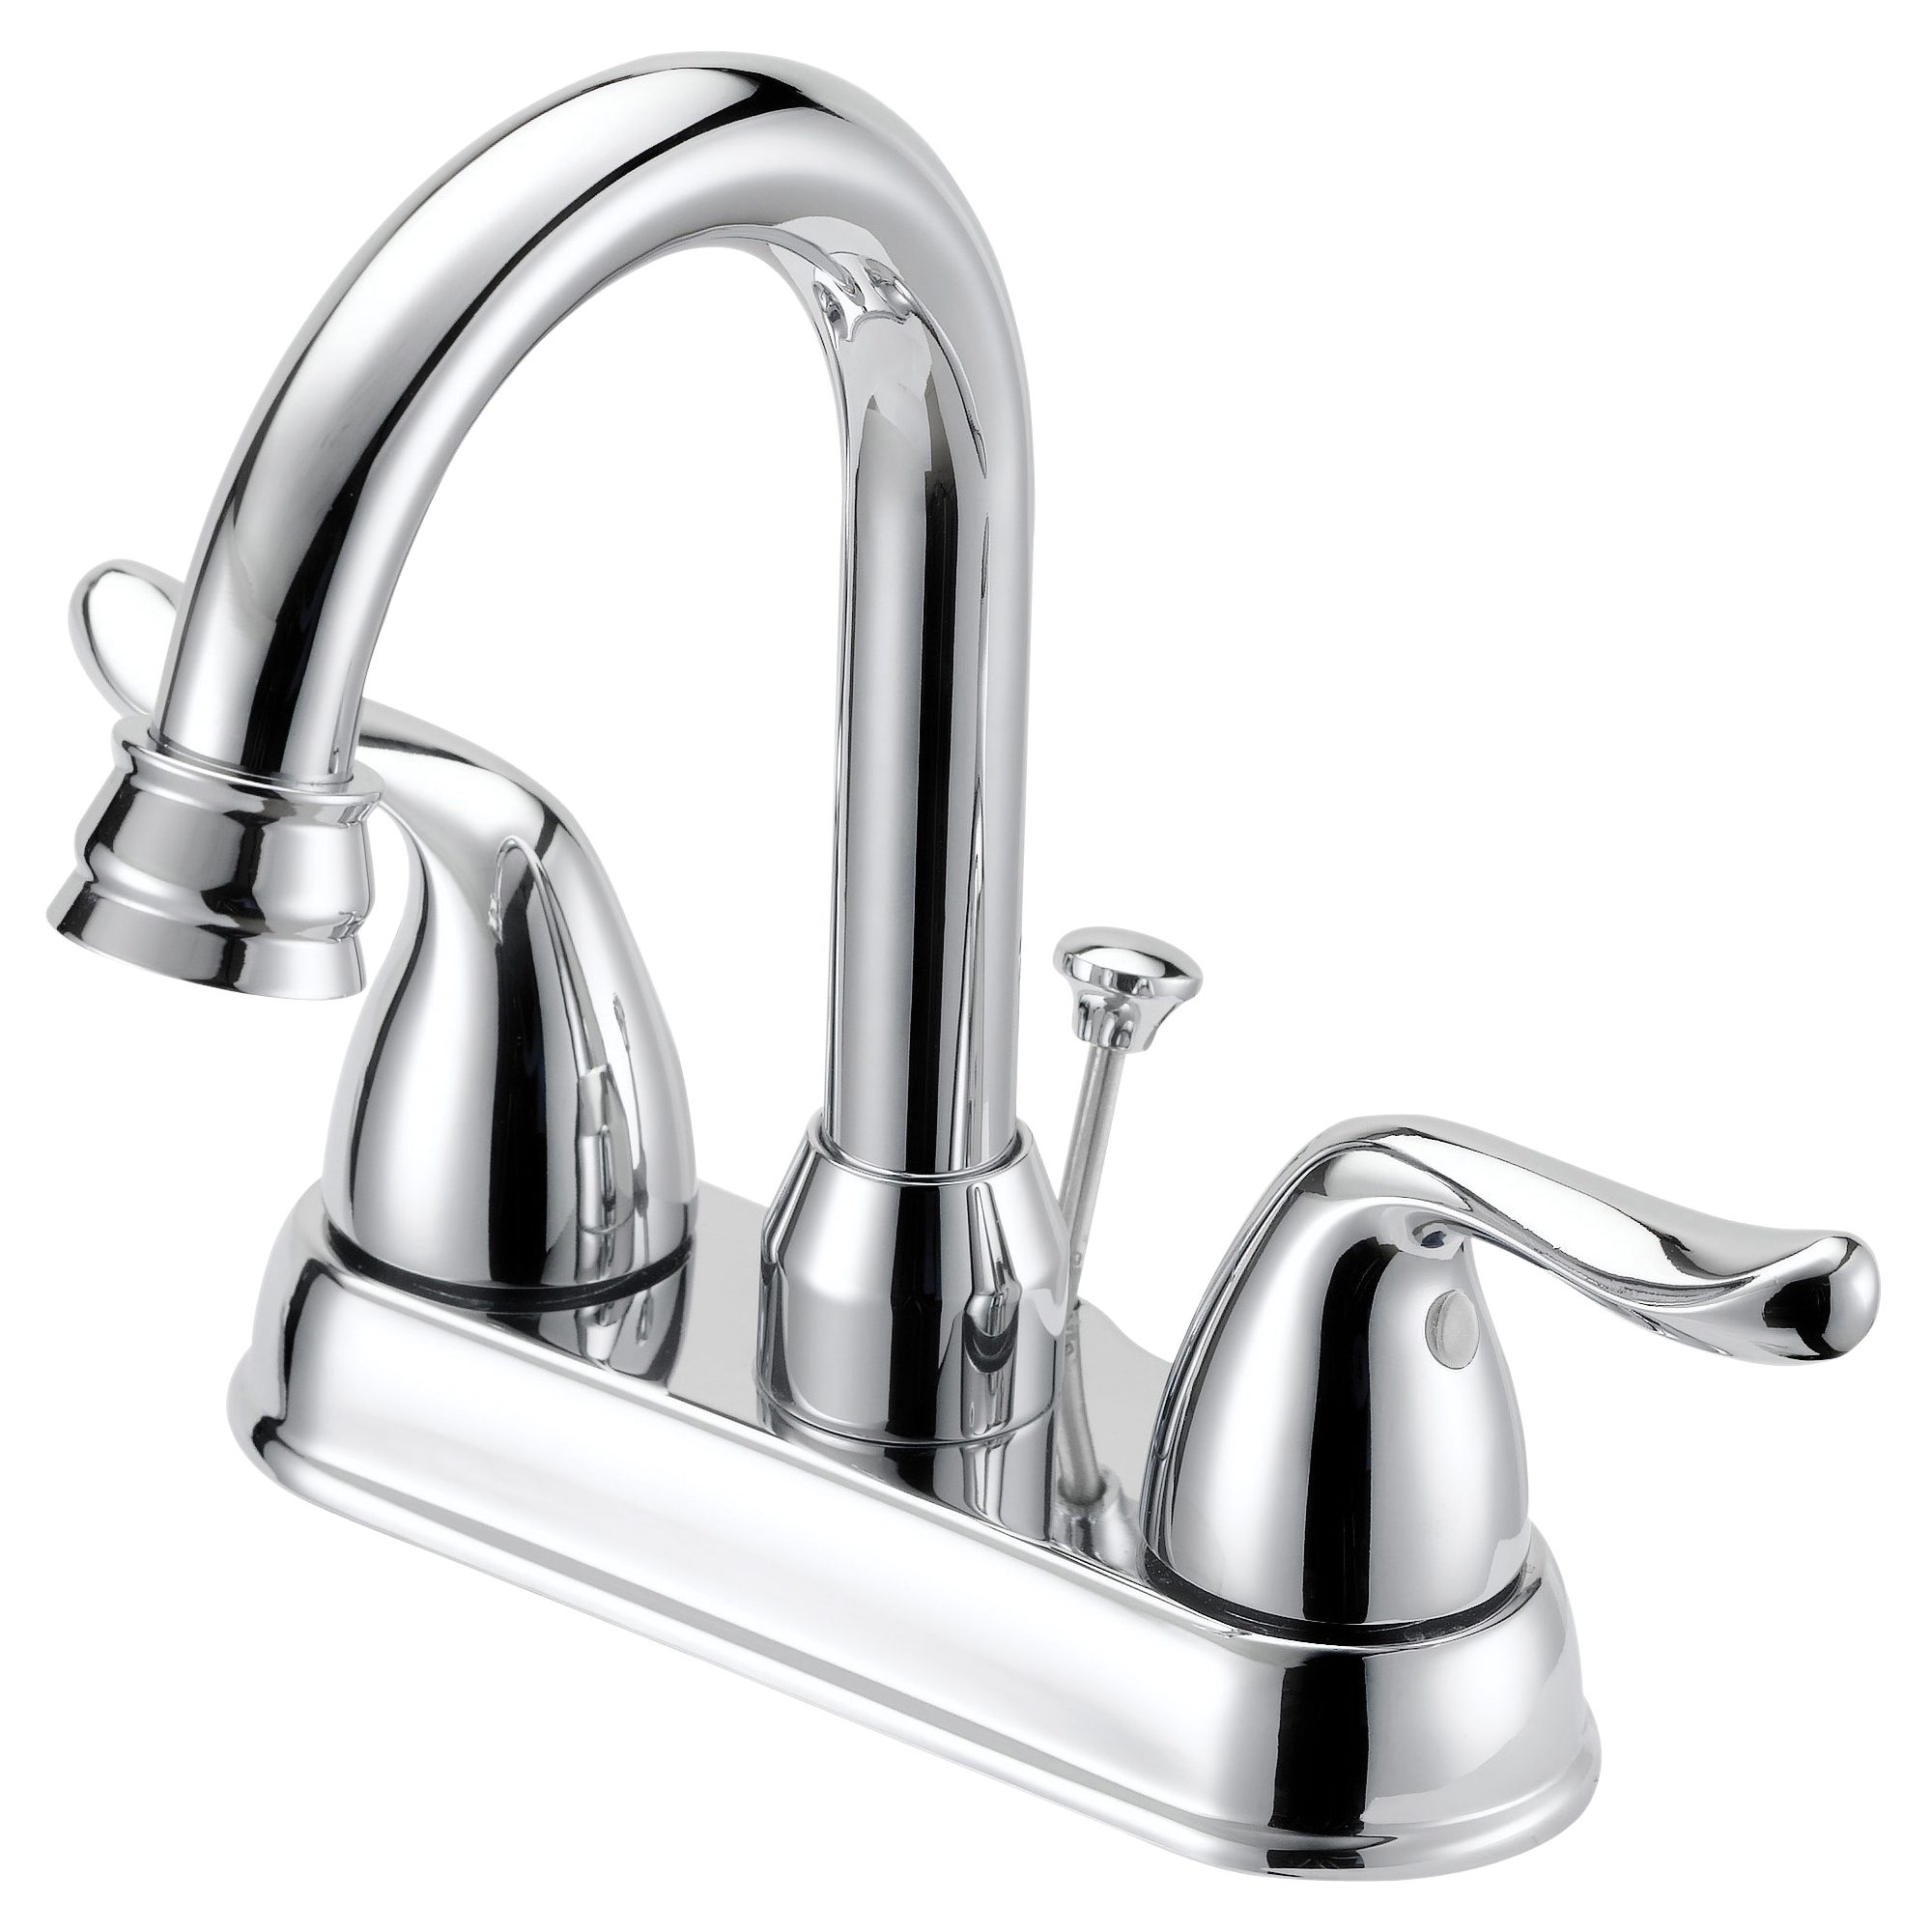 TQ-5111080CP Lavatory Faucet, 1.2 gpm, 2-Faucet Handle, 3-Faucet Hole, Metal/Plastic, Chrome Plated